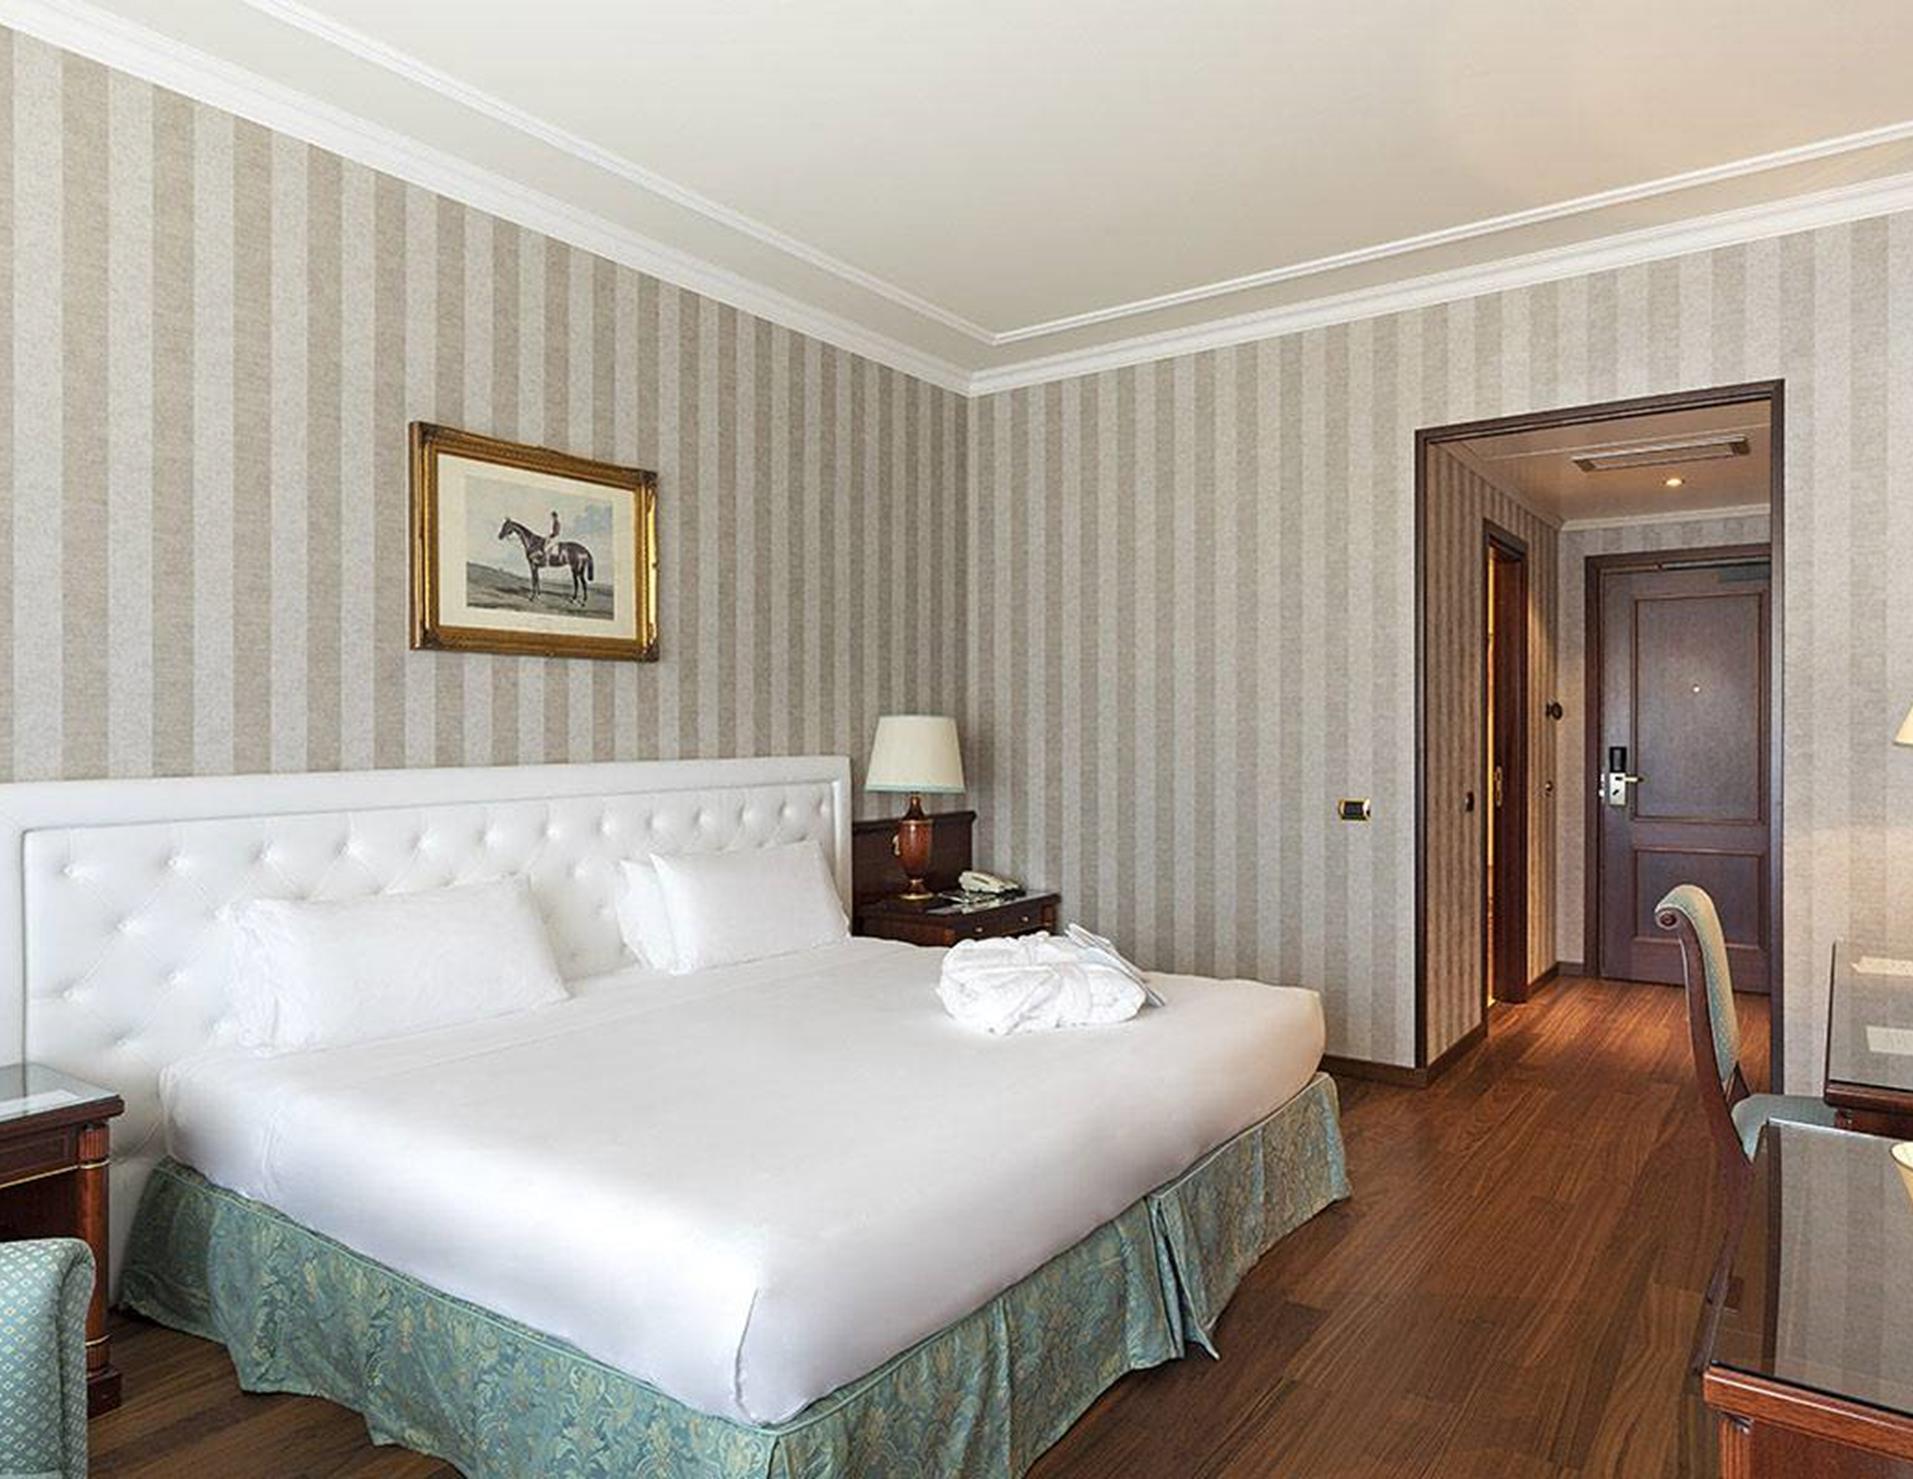 Royal Hotel Carlton - Room 6